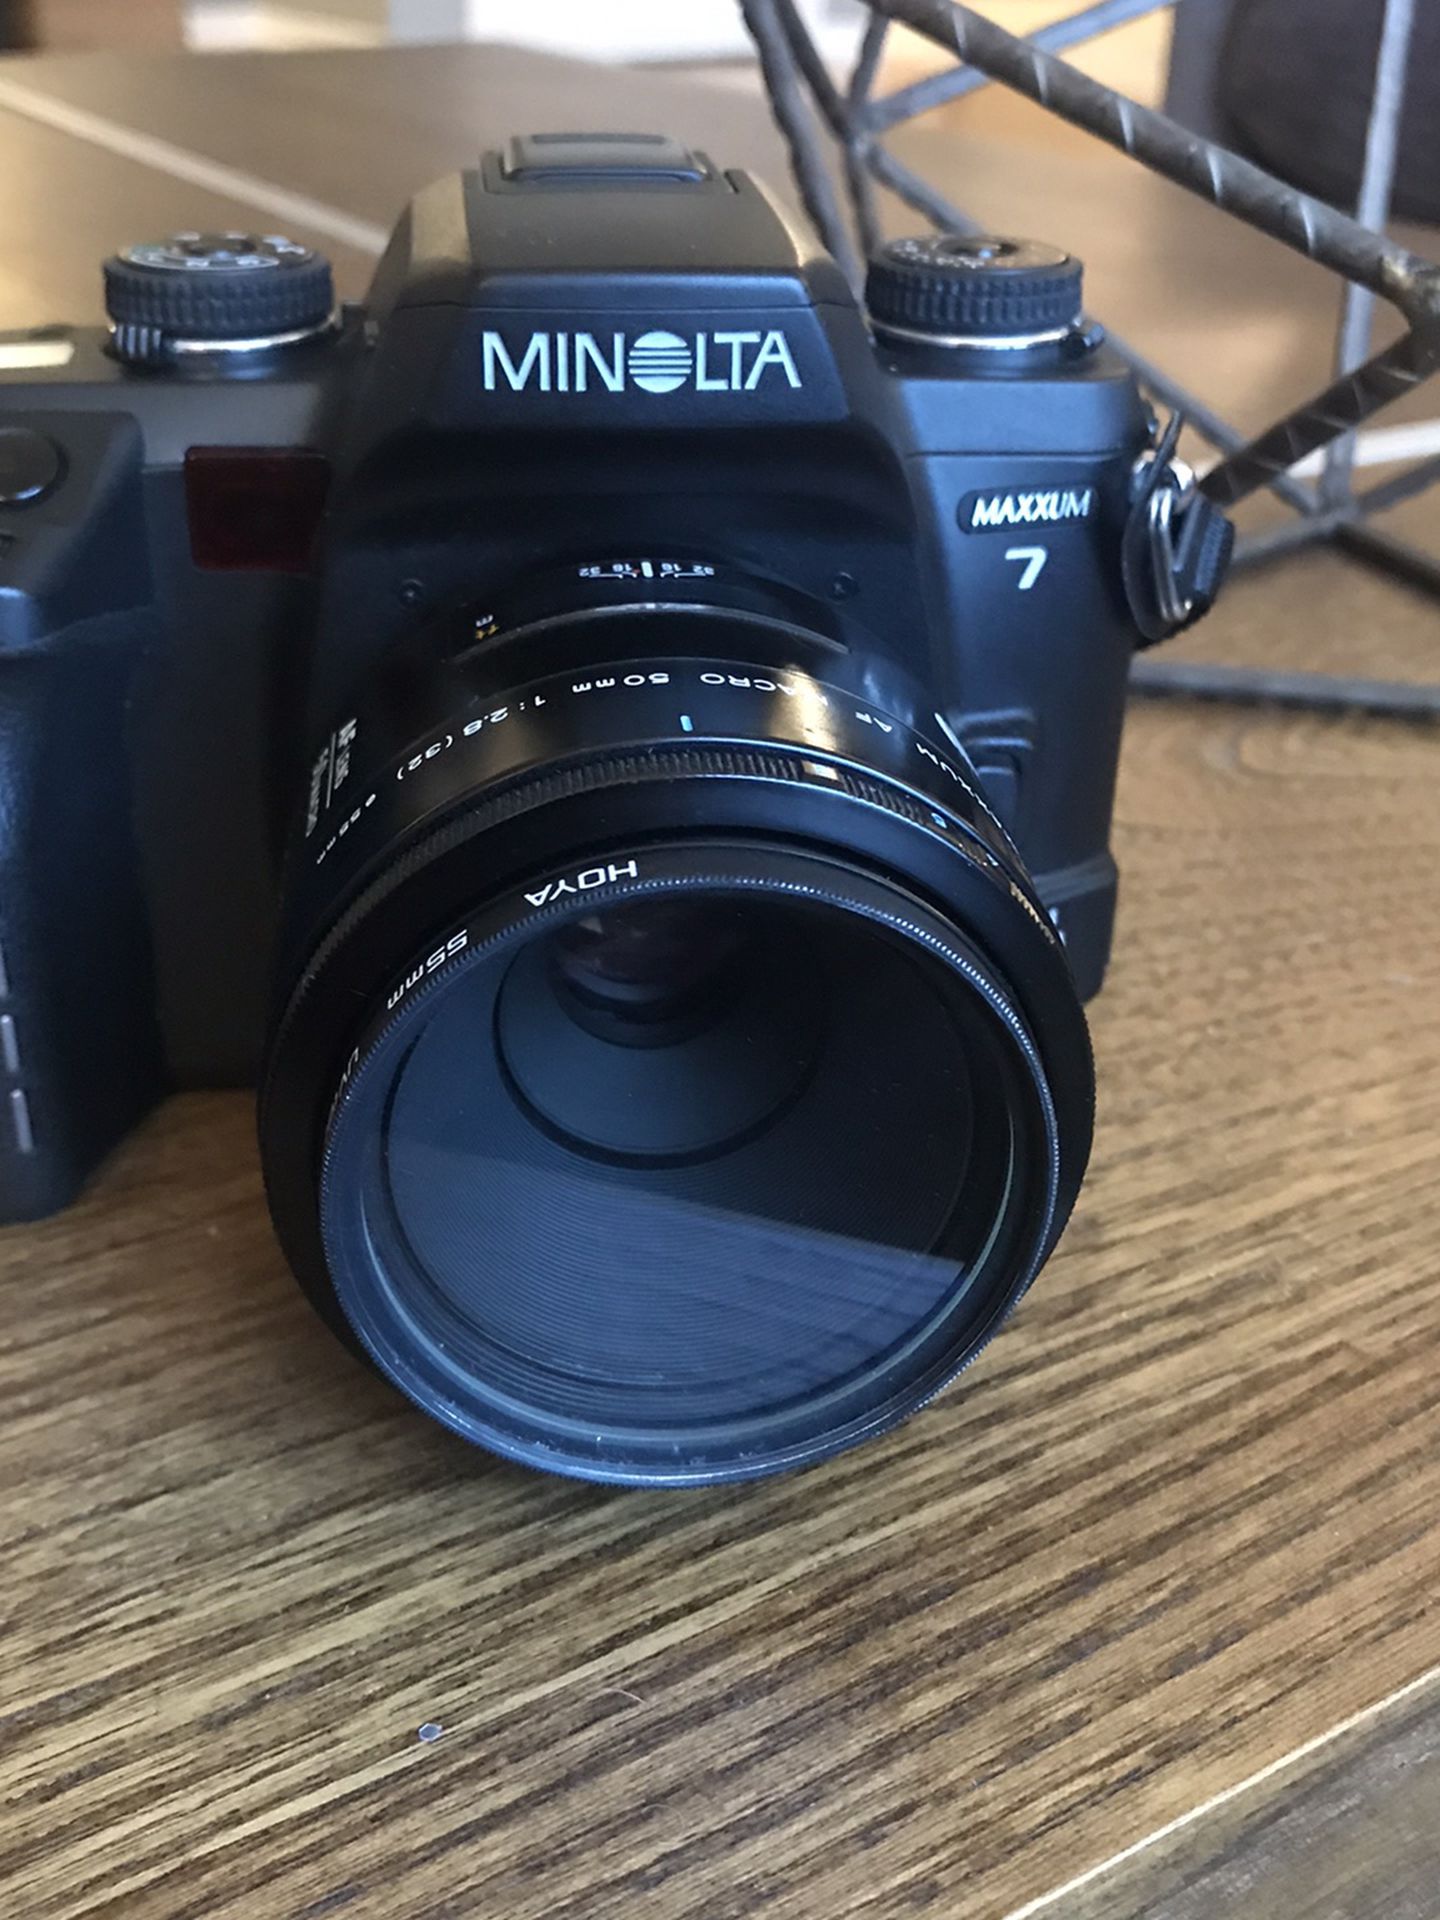 Minolta Alpha / Dynax / Maxxum 7 35mm Film Camera & 50mm Macro Lens